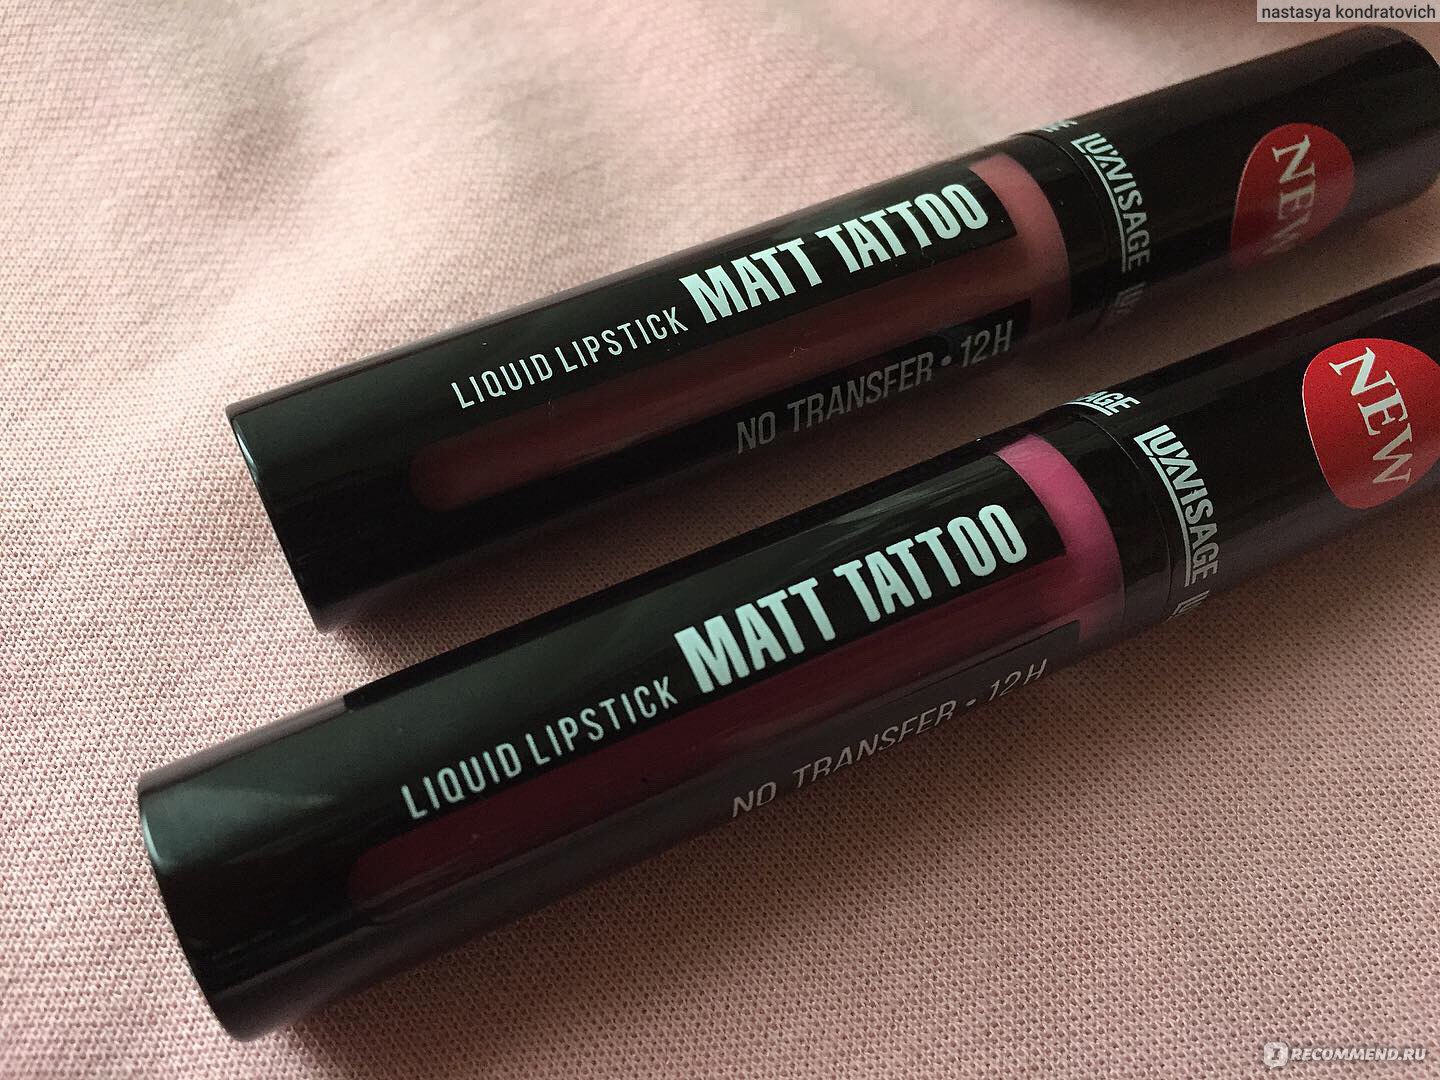 LUXVISAGE Matt Tattoo no transfer 12h Liquid Lipstick